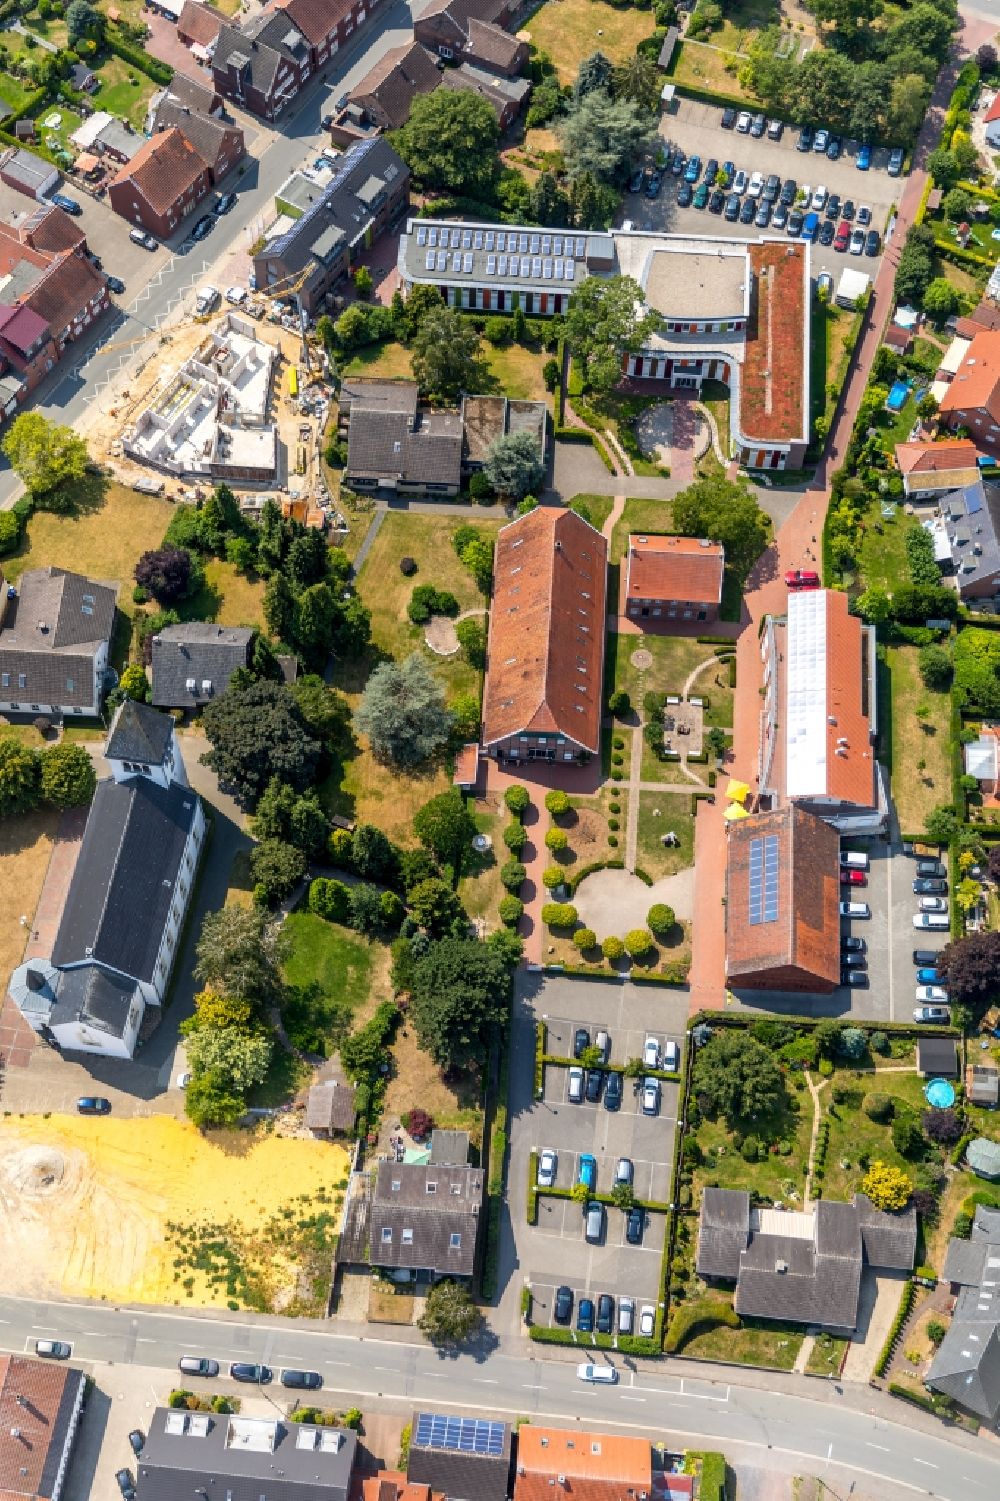 Aerial image Walstedde - Hospital grounds of the Haus Walstedde Children's Hospital in Walstedde, North Rhine-Westphalia, Germany